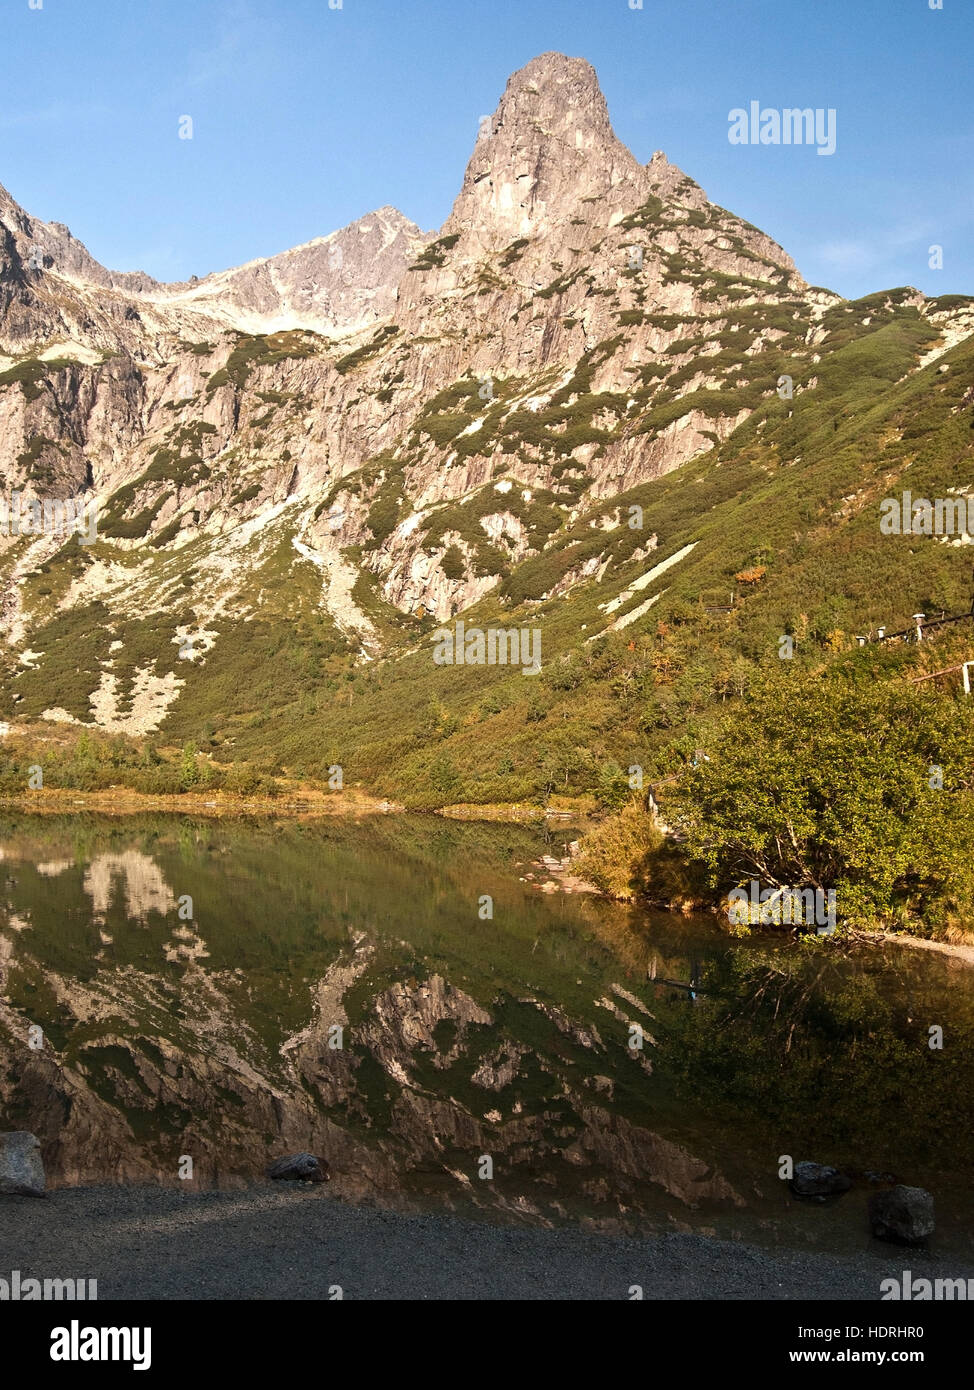 Zelene pleso Bergsee mit jastrabia Link und kolovy stit Berggipfel in der Hohen Tatra in der Slowakei Stockfoto